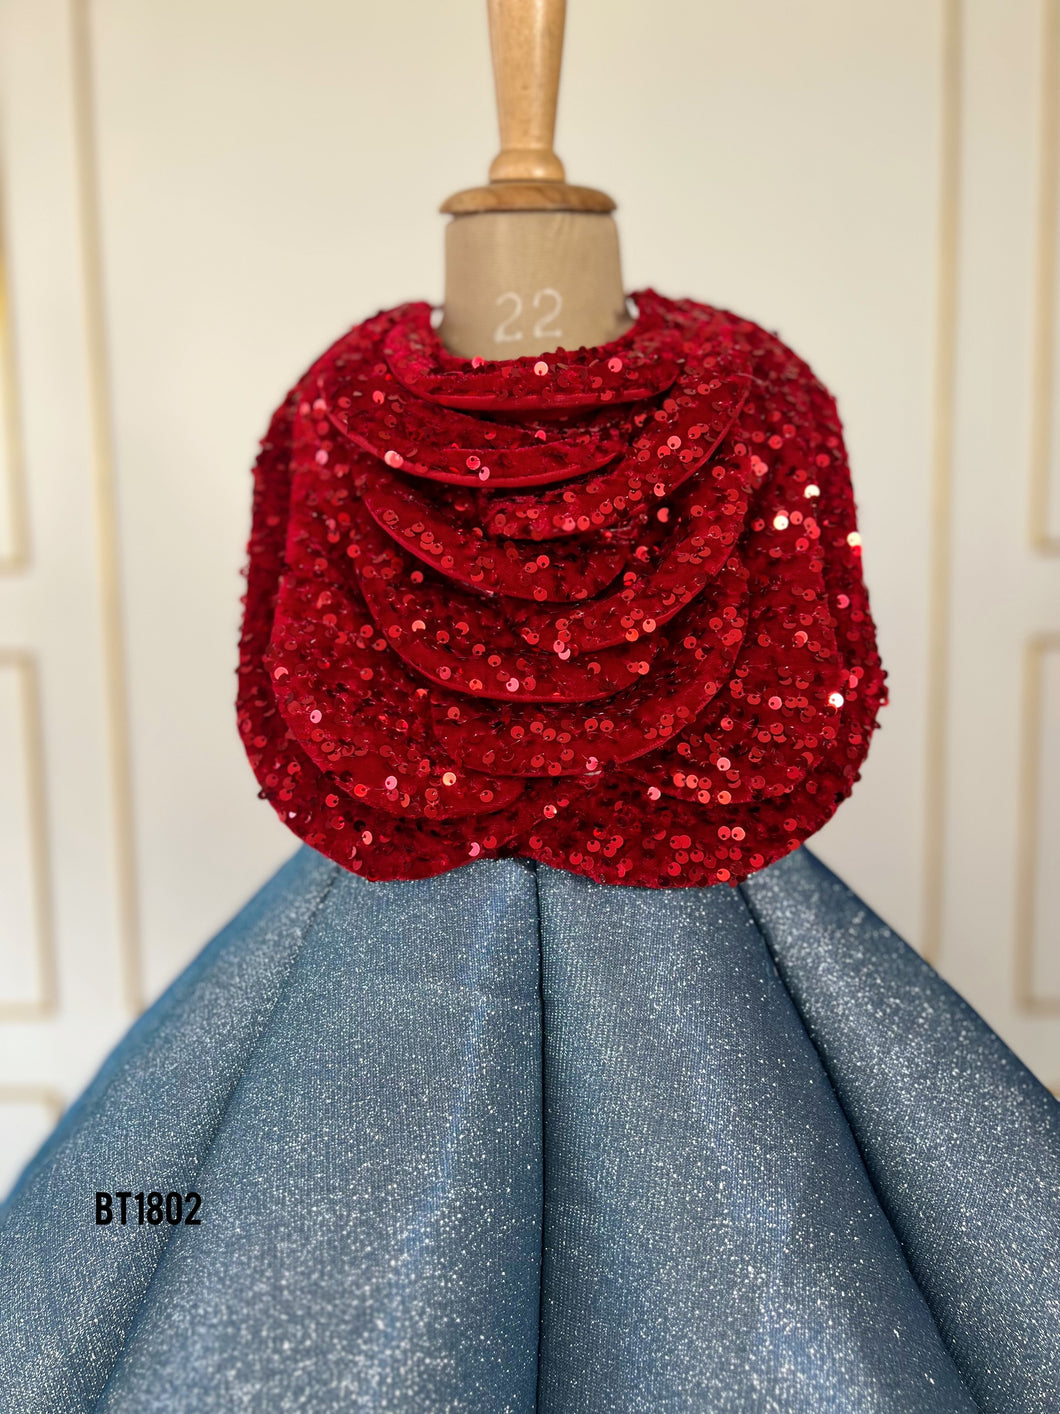 BT1802 Starlight Soirée: Midnight Blue Sequin Dress for Little Dreamers